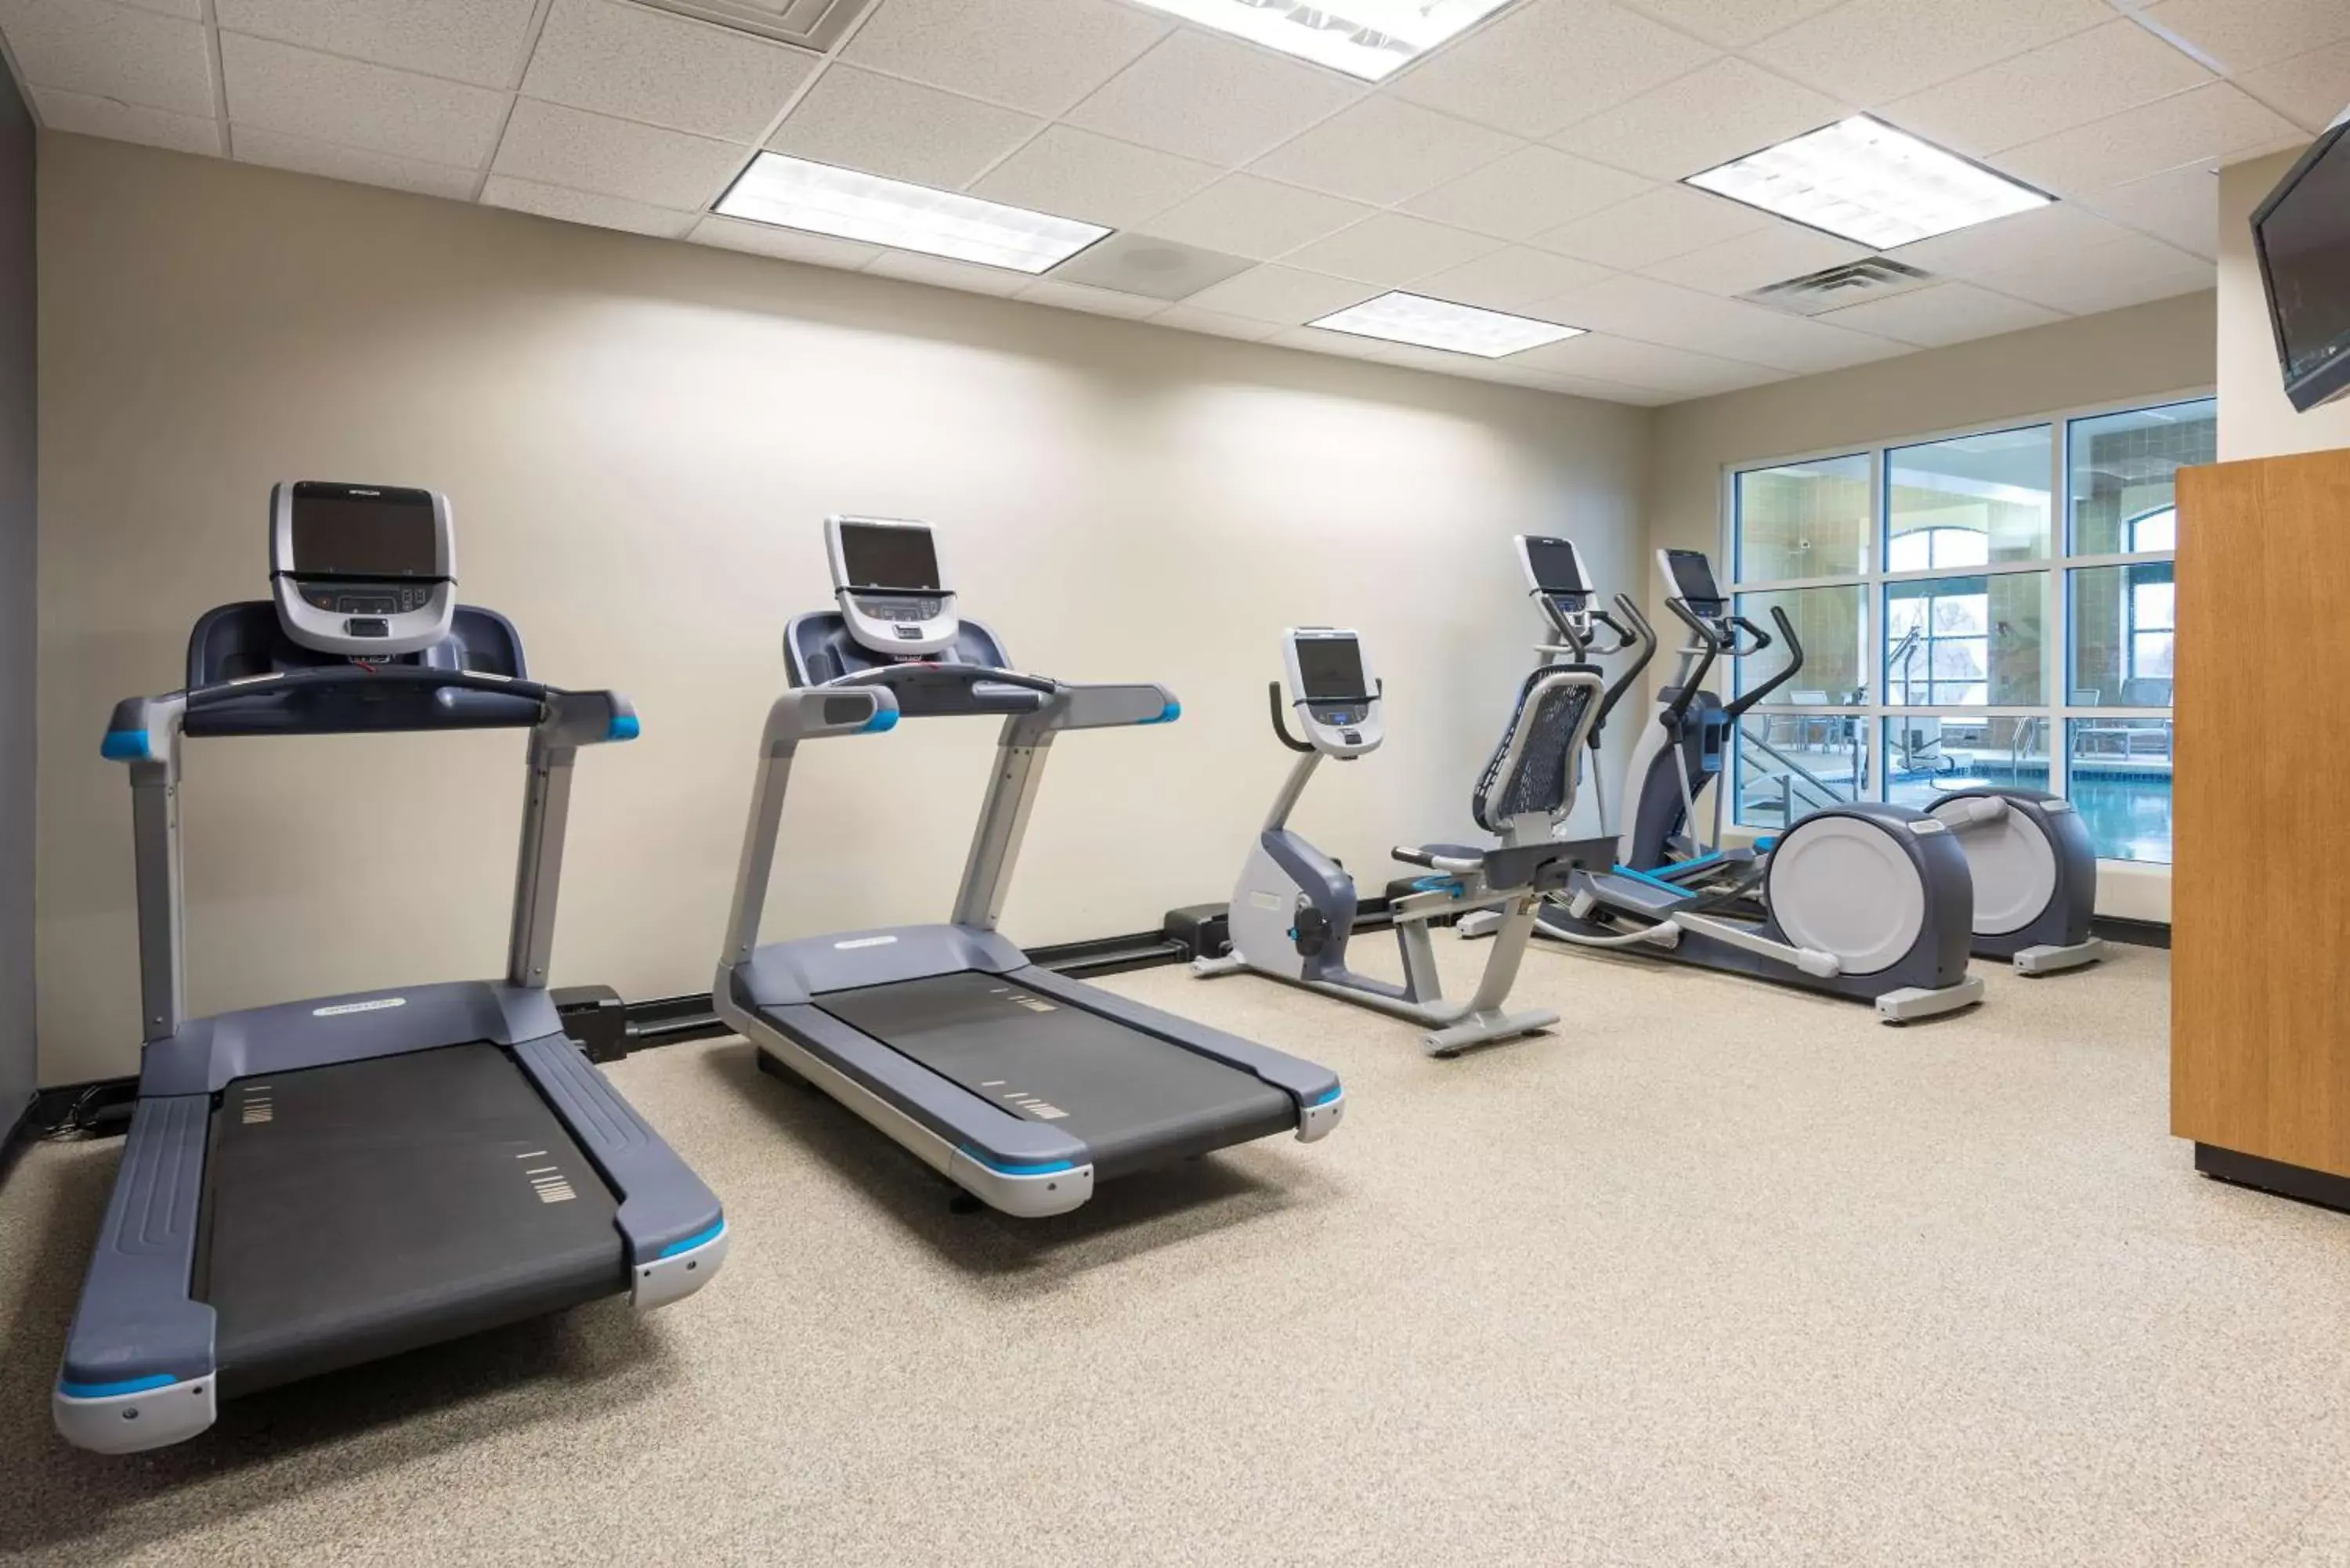 Fitness centre/facilities, Fitness Center/Facilities in Doubletree by Hilton Pleasant Prairie Kenosha, WI